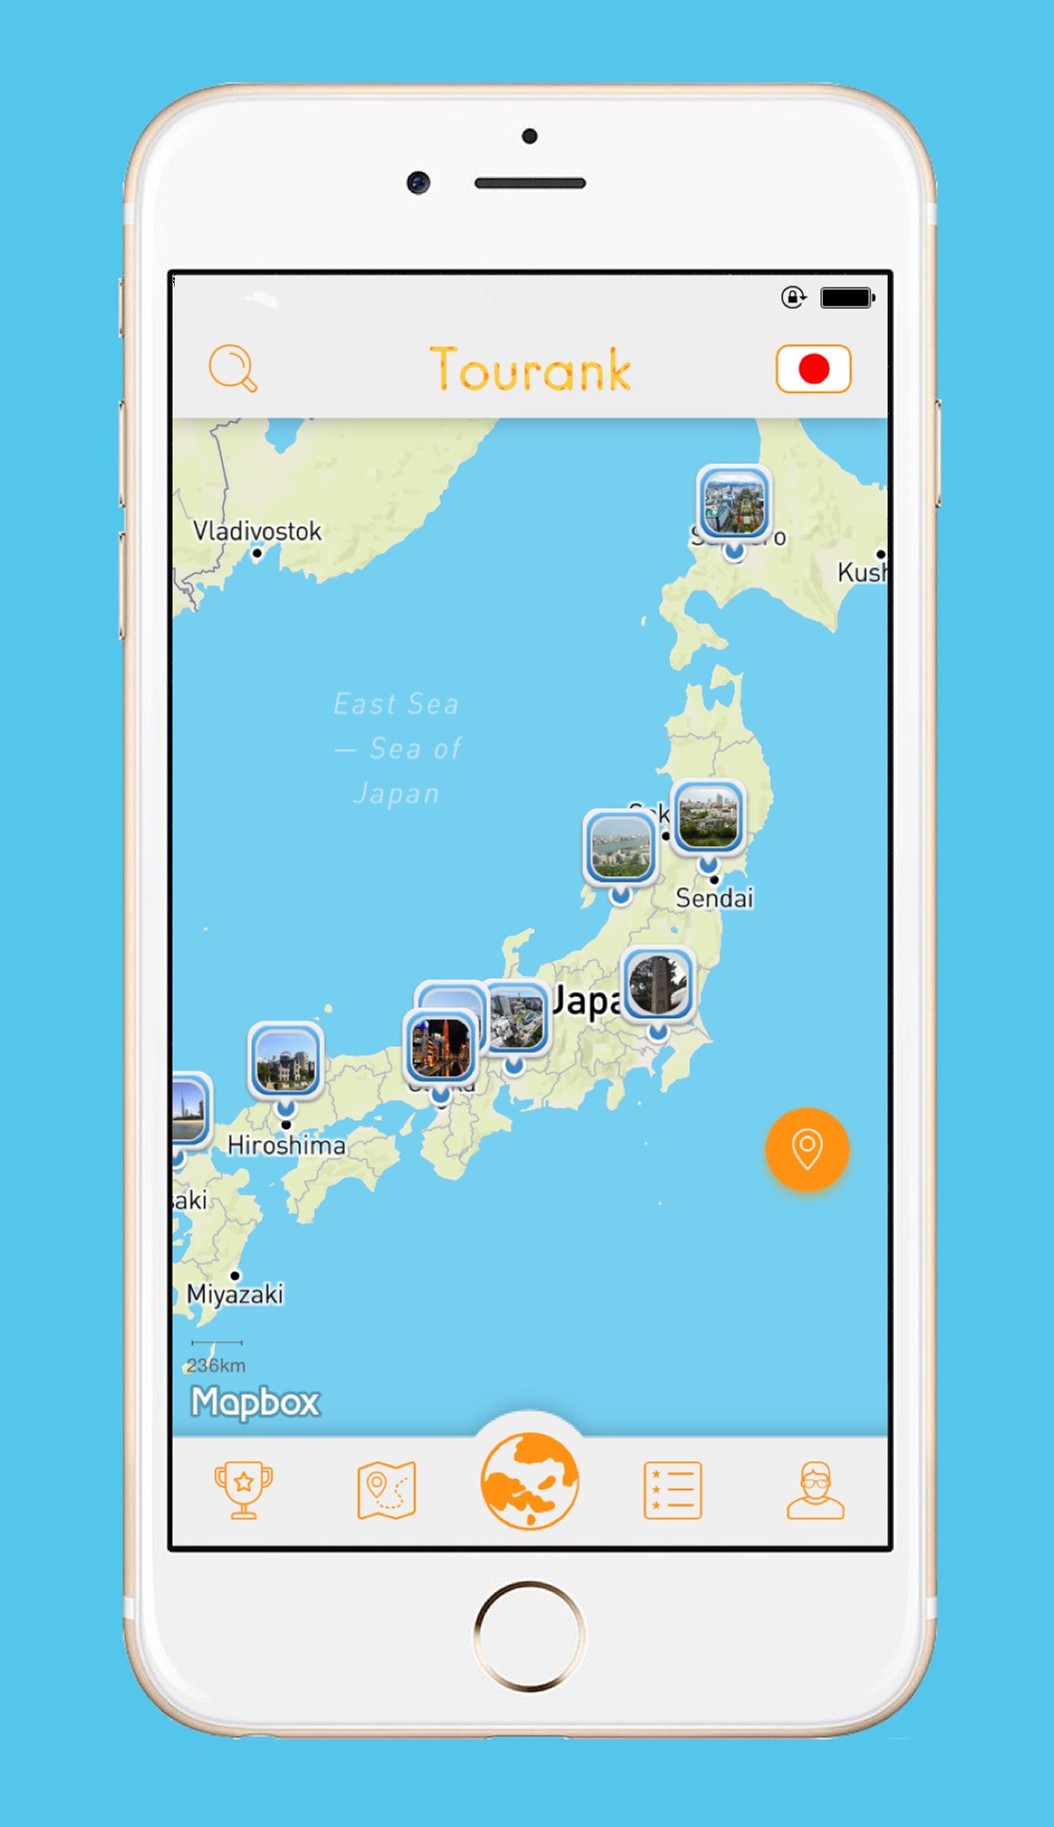 Tourank Smart Mobile Travel Guide on Japan